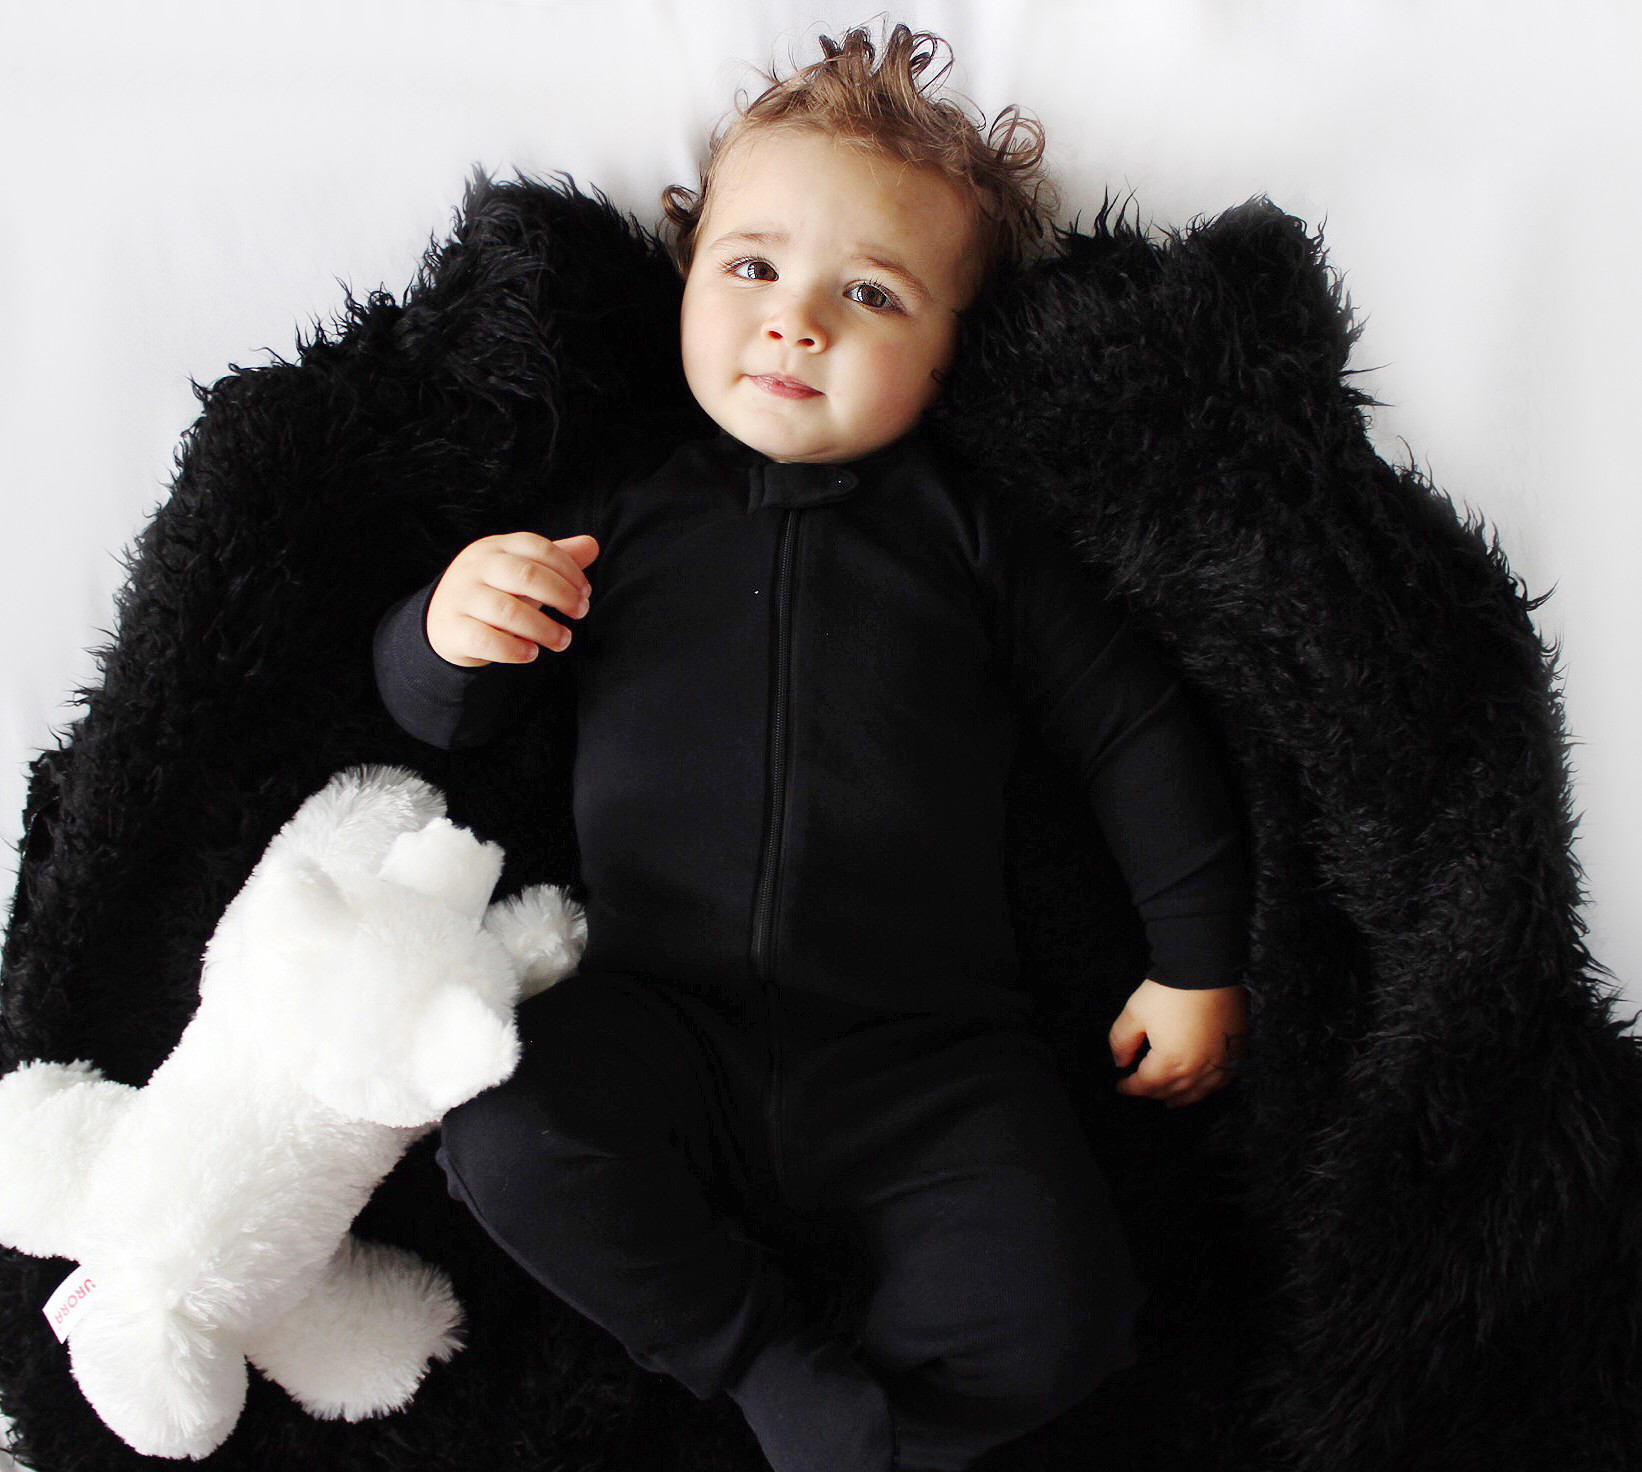 Jon Snow Costume DIY
 DIY HALLOWEEN COSTUME – BABY JON SNOW